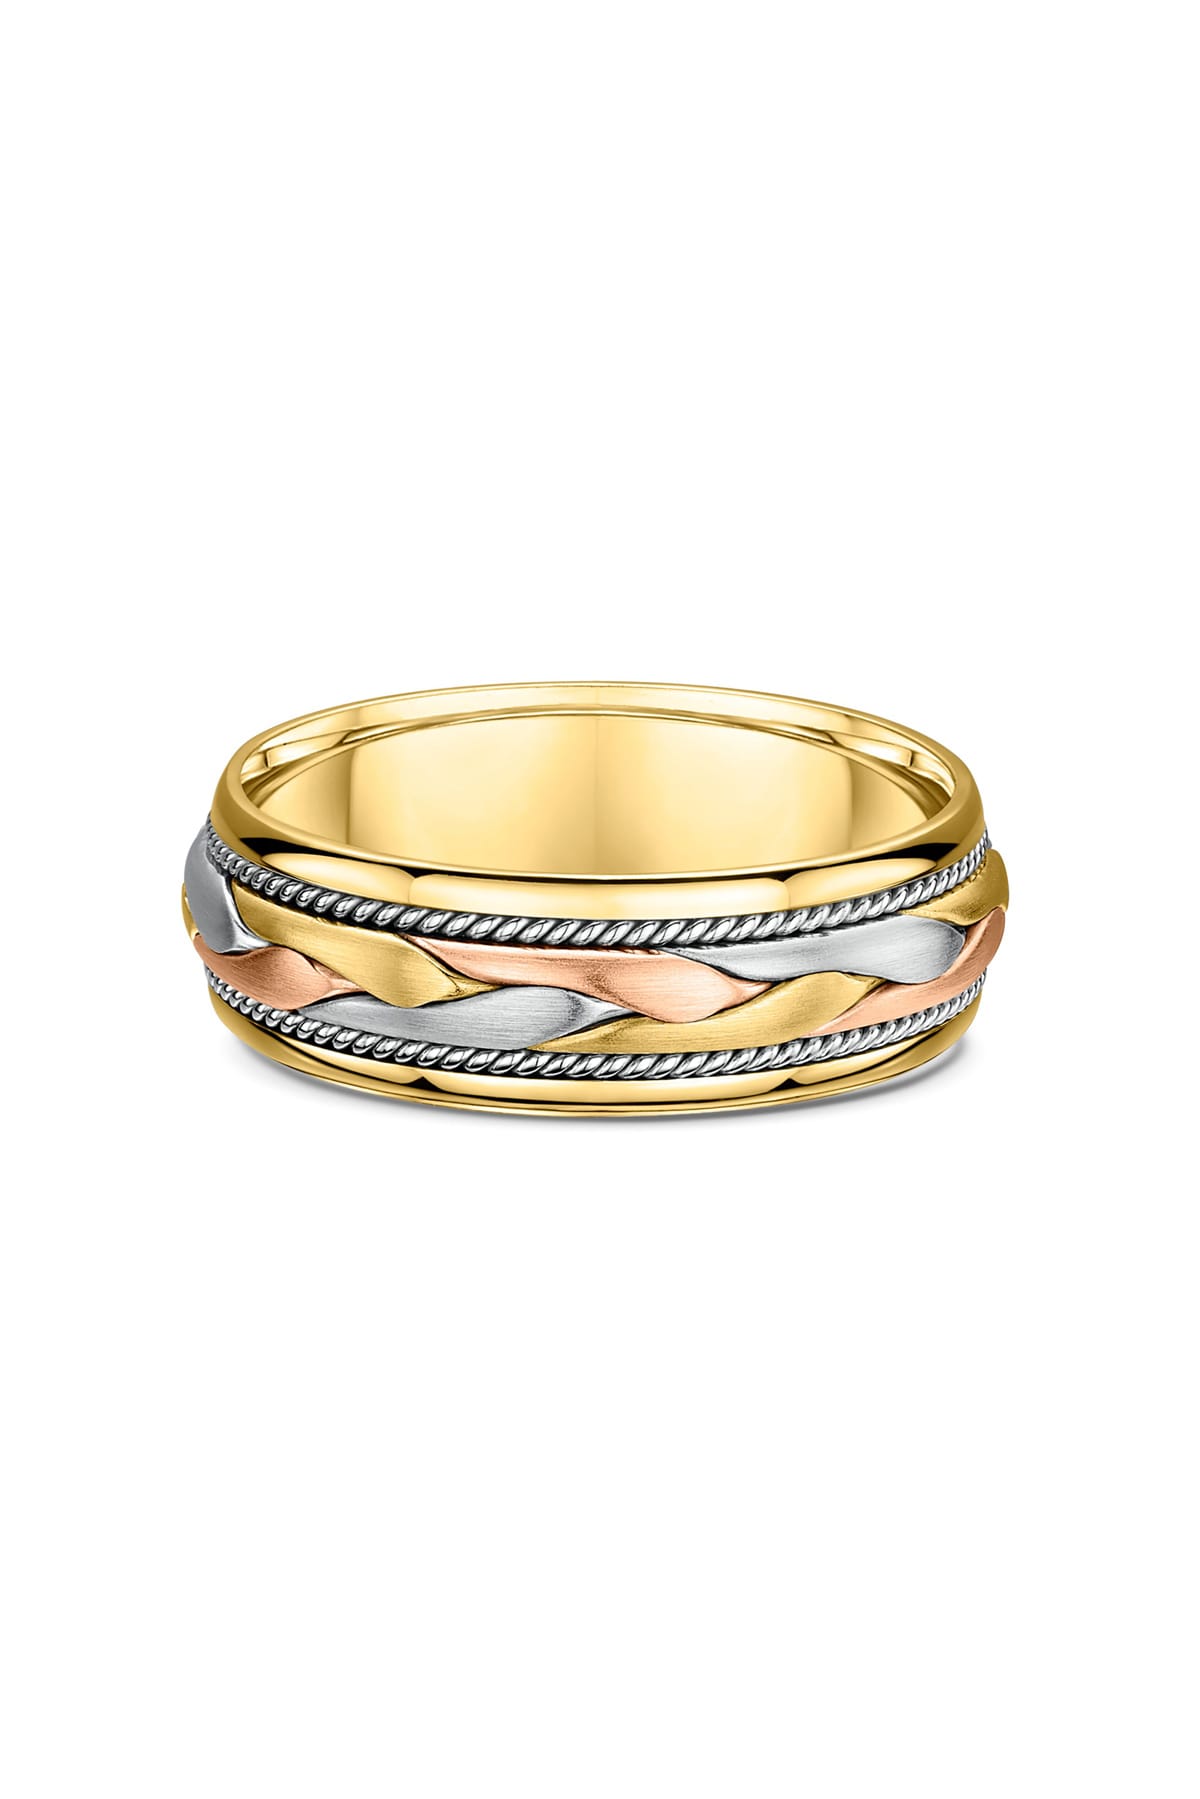 Men's Wedding Ring 1027000. Available at LeGassick Diamonds & Jewellery Gold Coast, Australia.